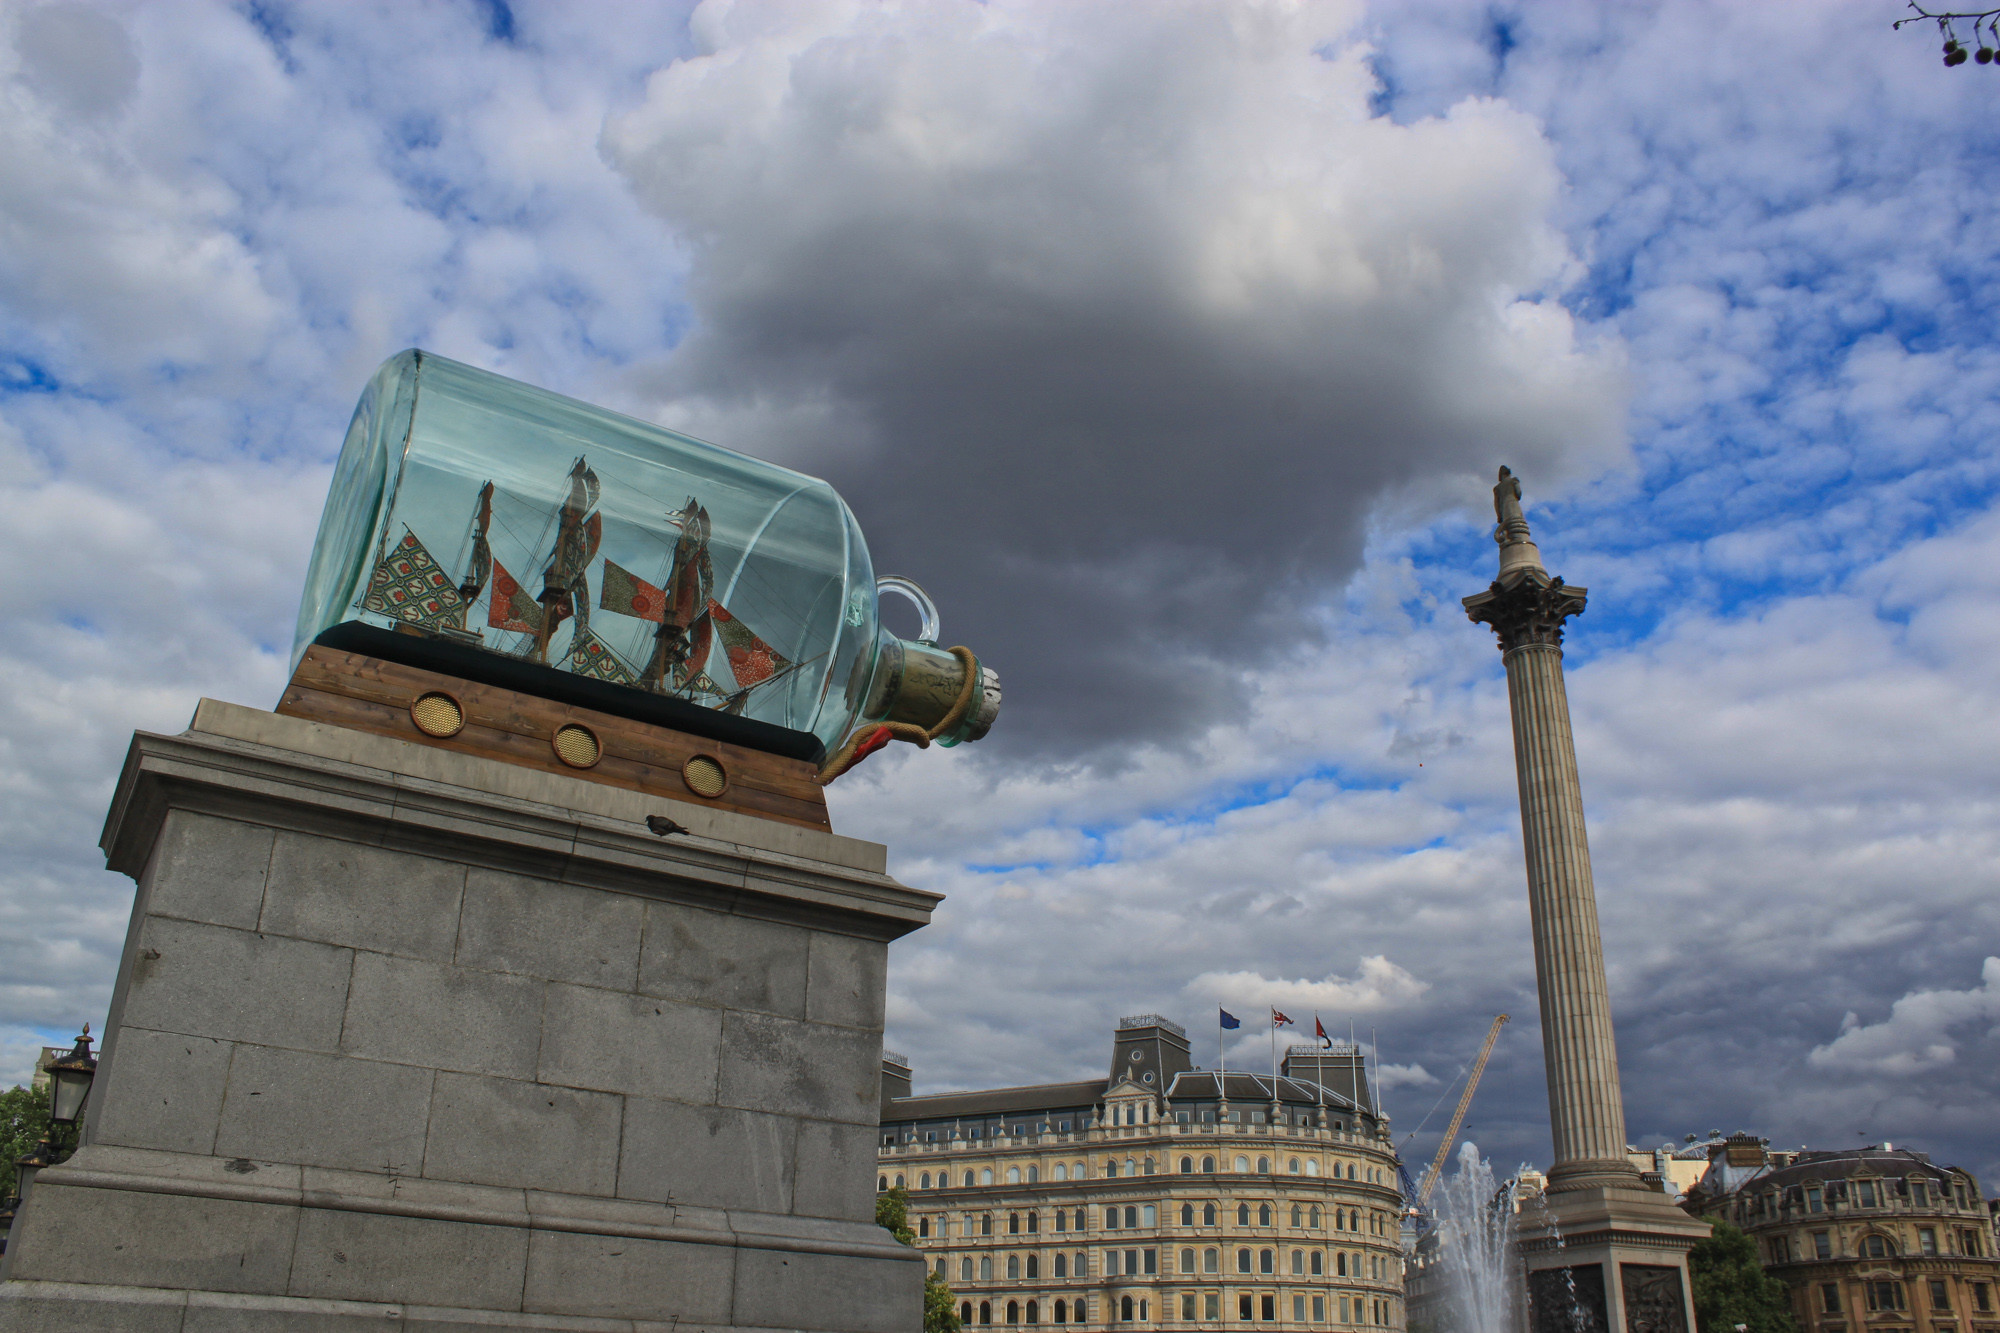 Photo of Fourth Plinth, Trafalgar Square, London by Andy Hay